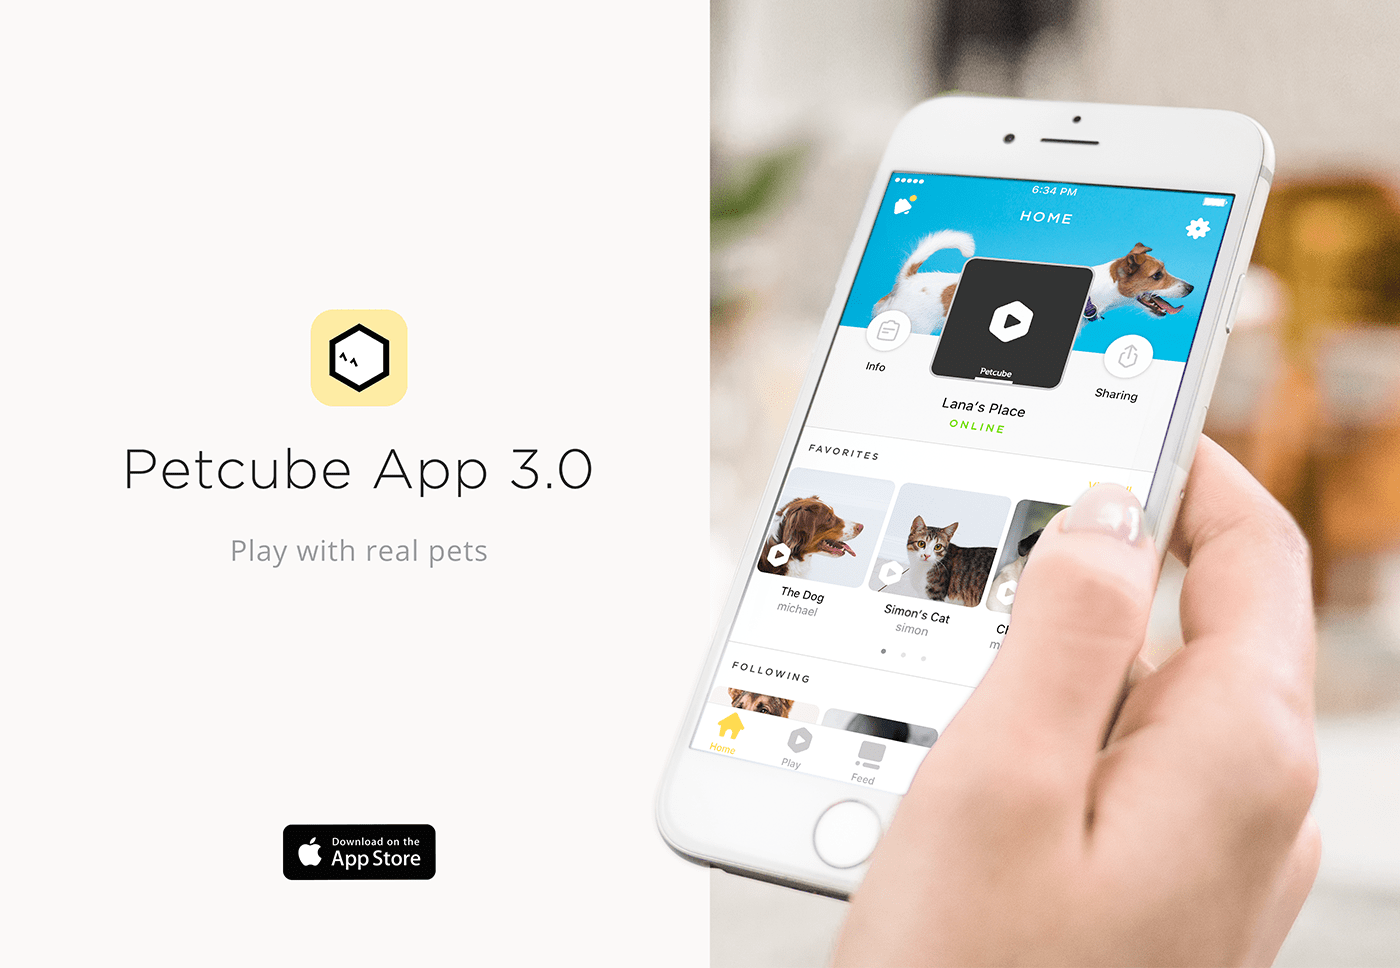 Petcube App 3.0